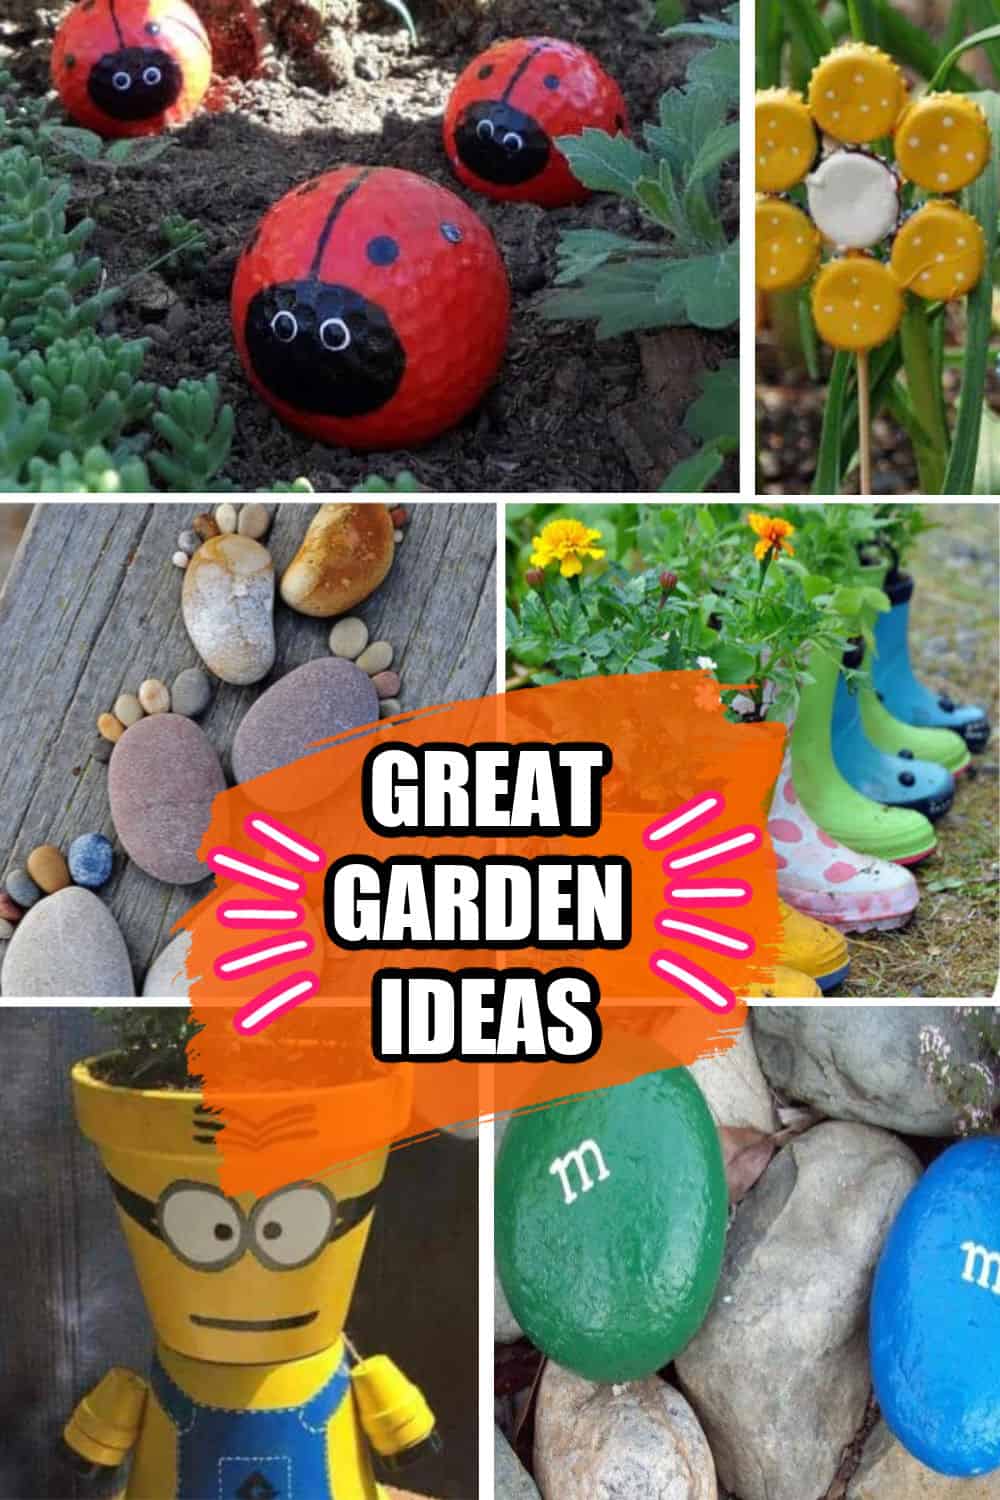 Cute Garden Ideas and Garden Decorations - Princess Pinky Girl